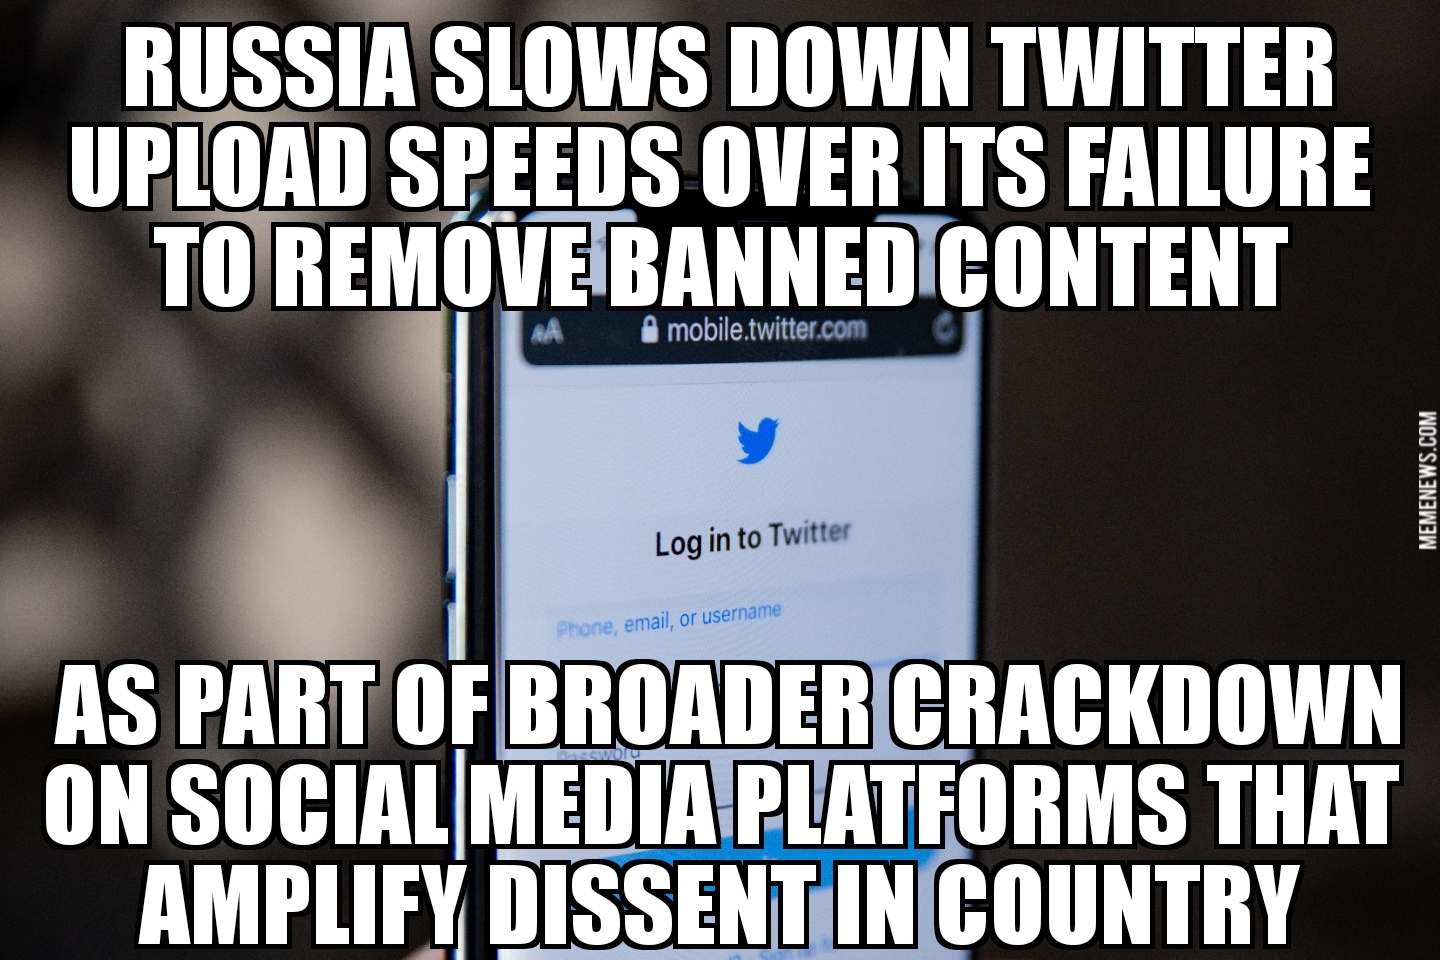 Russia slows Twitter speeds